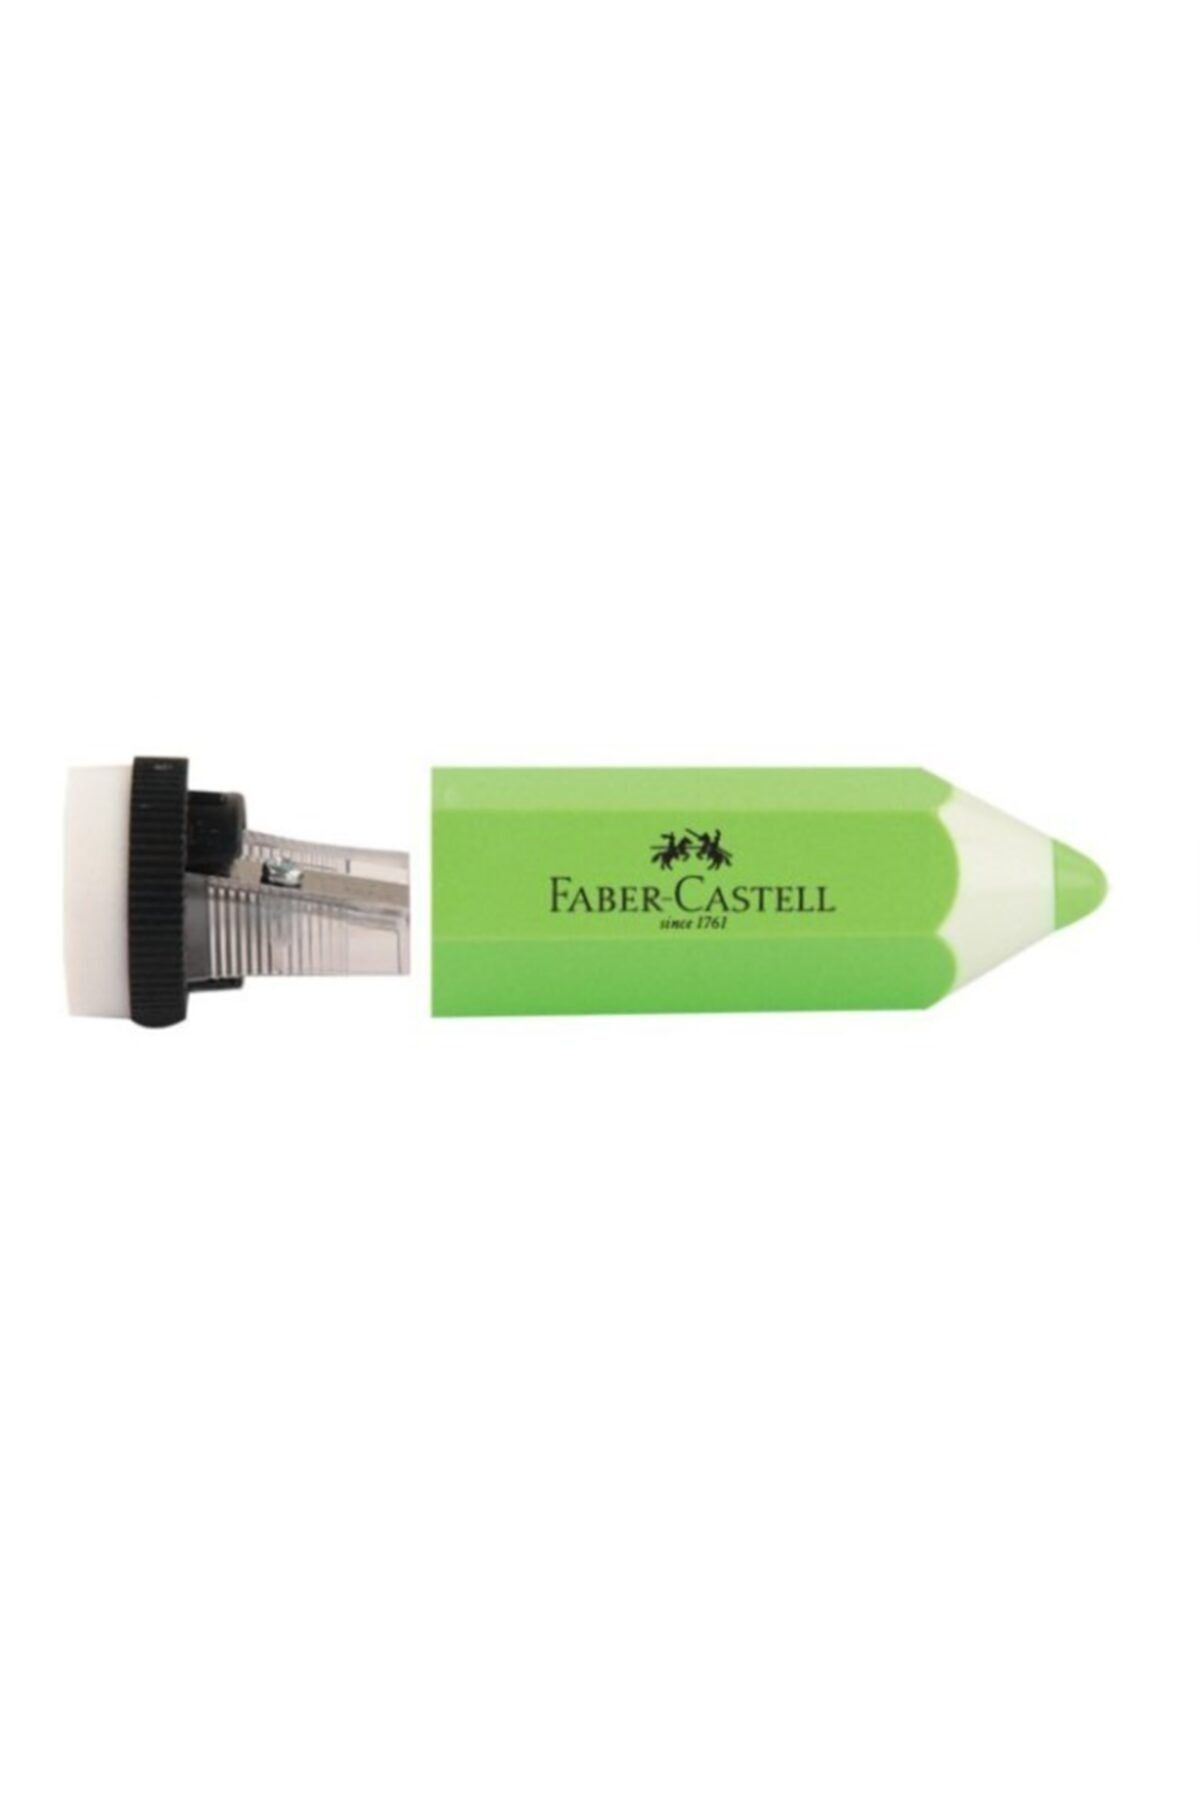 Faber Castell Kalem Şekilli Kalemtraş Yeşil